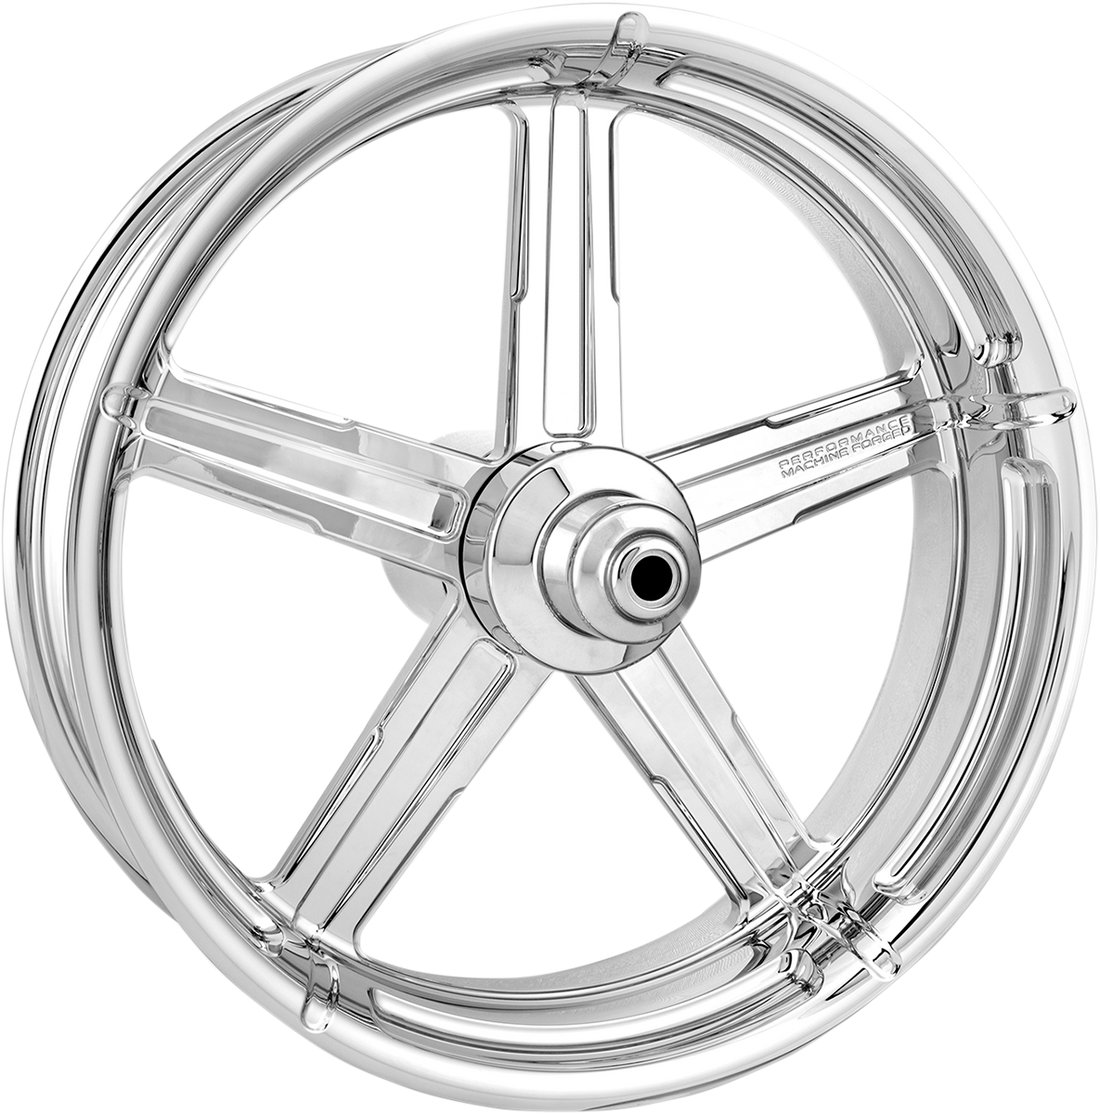 0202-2098 - PERFORMANCE MACHINE (PM) Wheel - Formula - Rear/Single Disc - with ABS - Chrome - 18"x5.50" - '09+ FL 12697814FRMCH